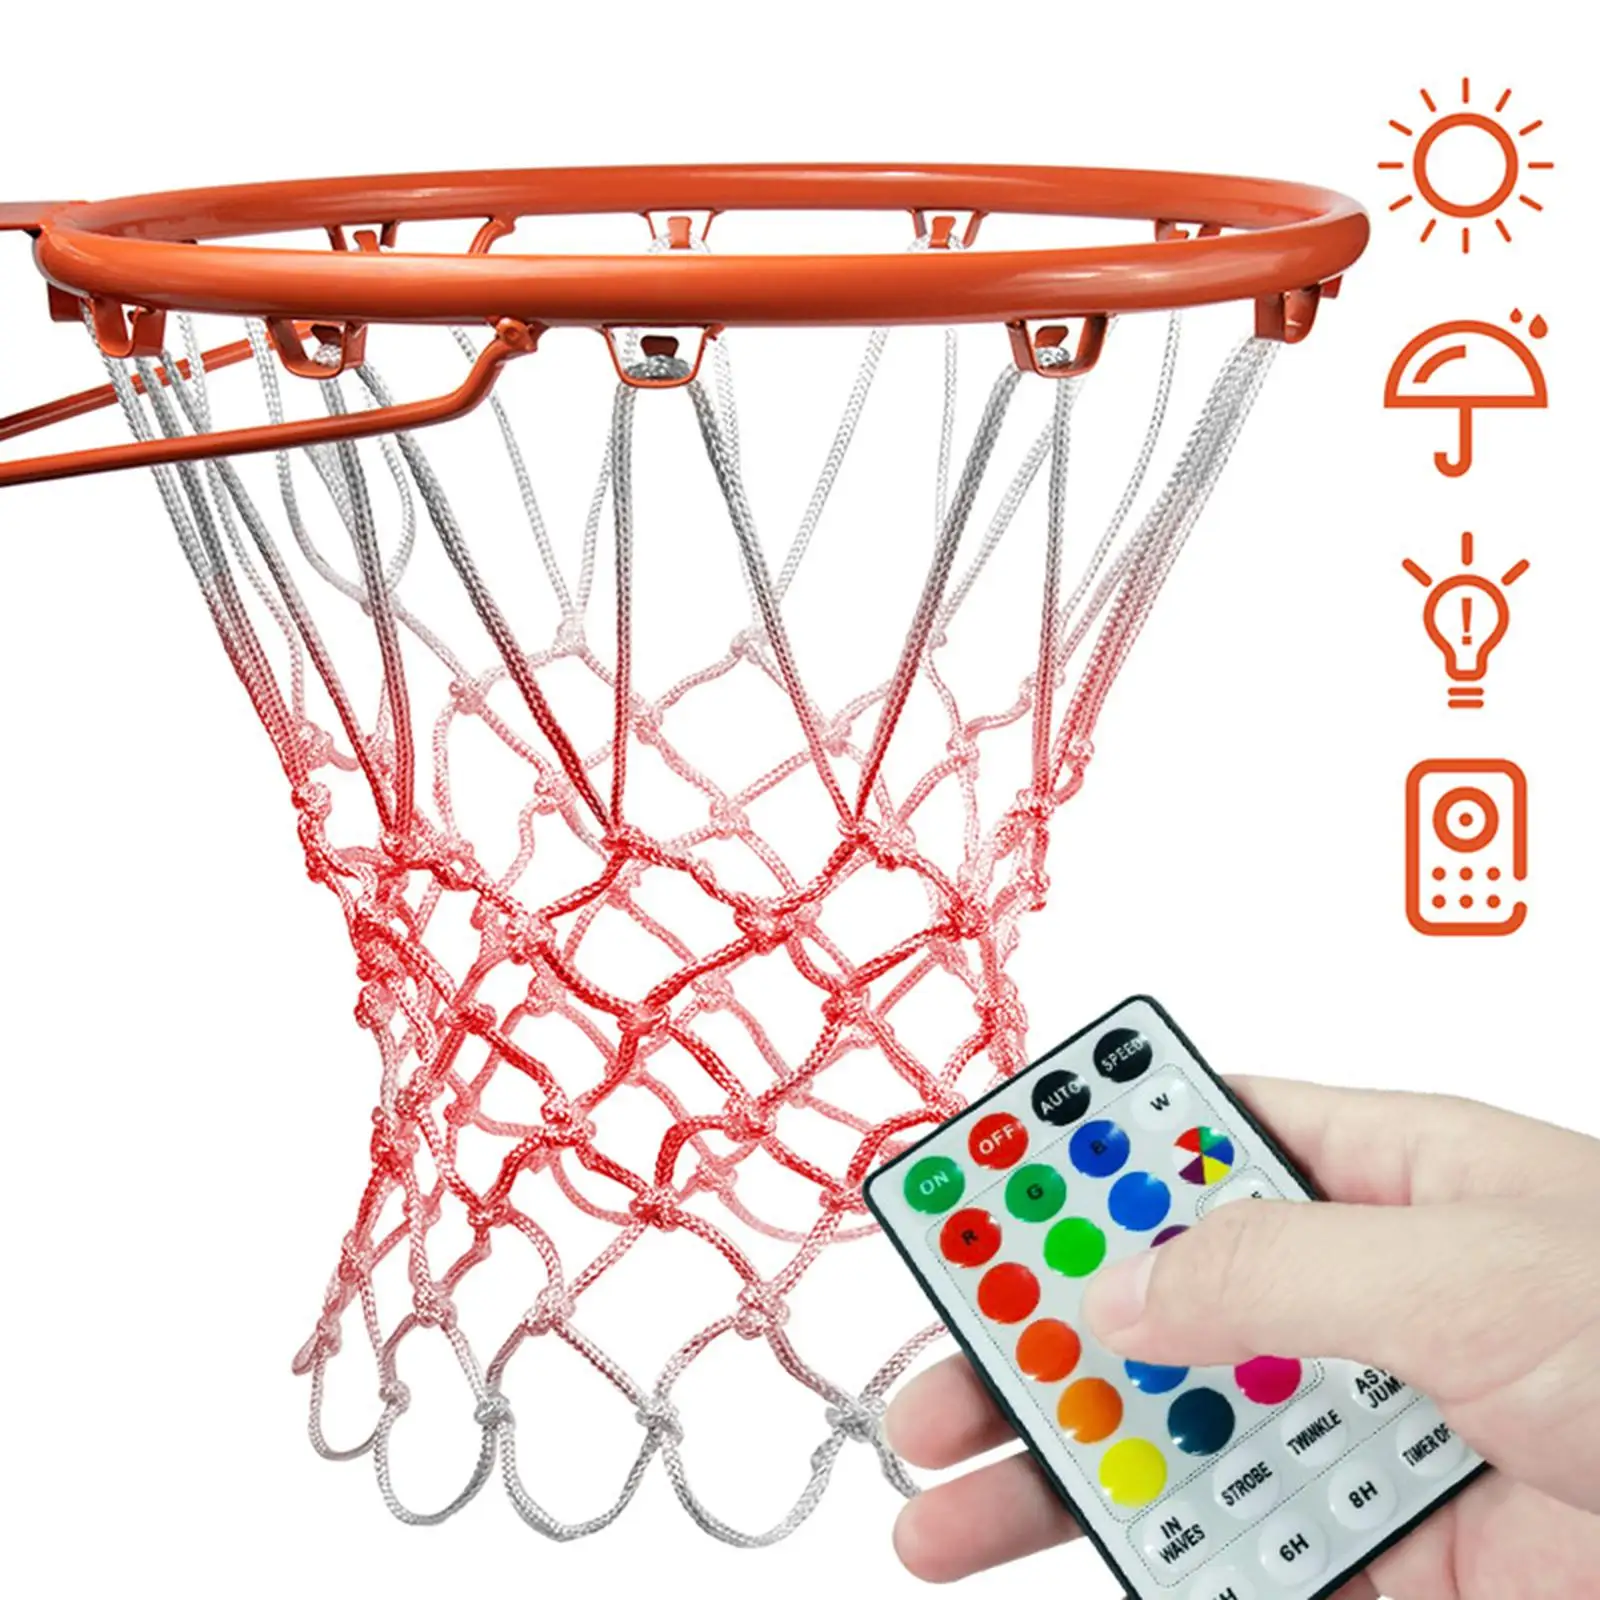 1 Set LED Light Basketball Net High-quality Nylon Dimming for Indoor LED Basketball Net Light Up Basketball Net